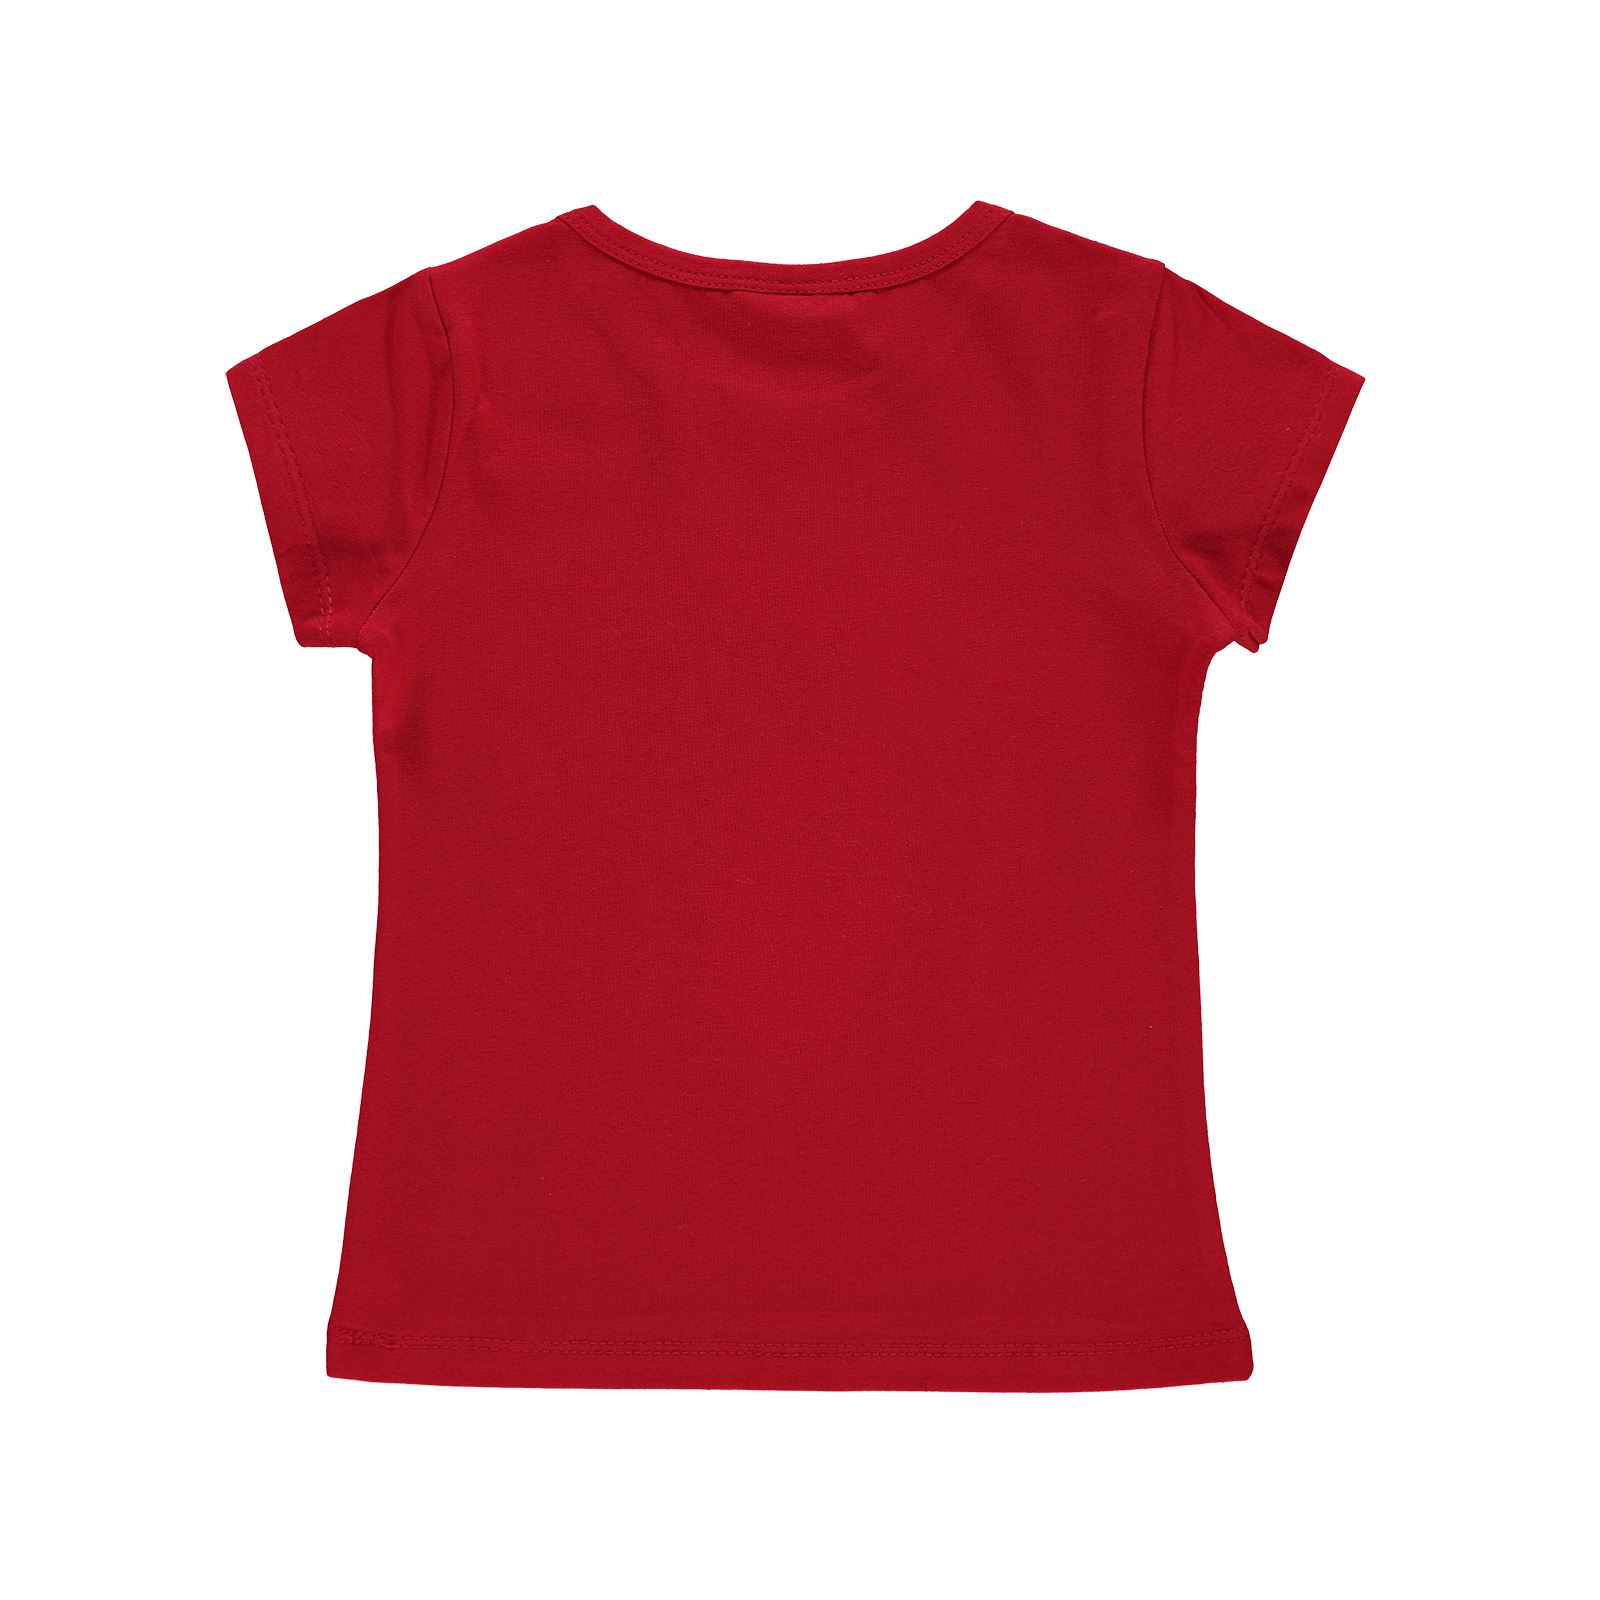 P&P Kız Çocuk Tişört 2-5 Yaş Kırmızı